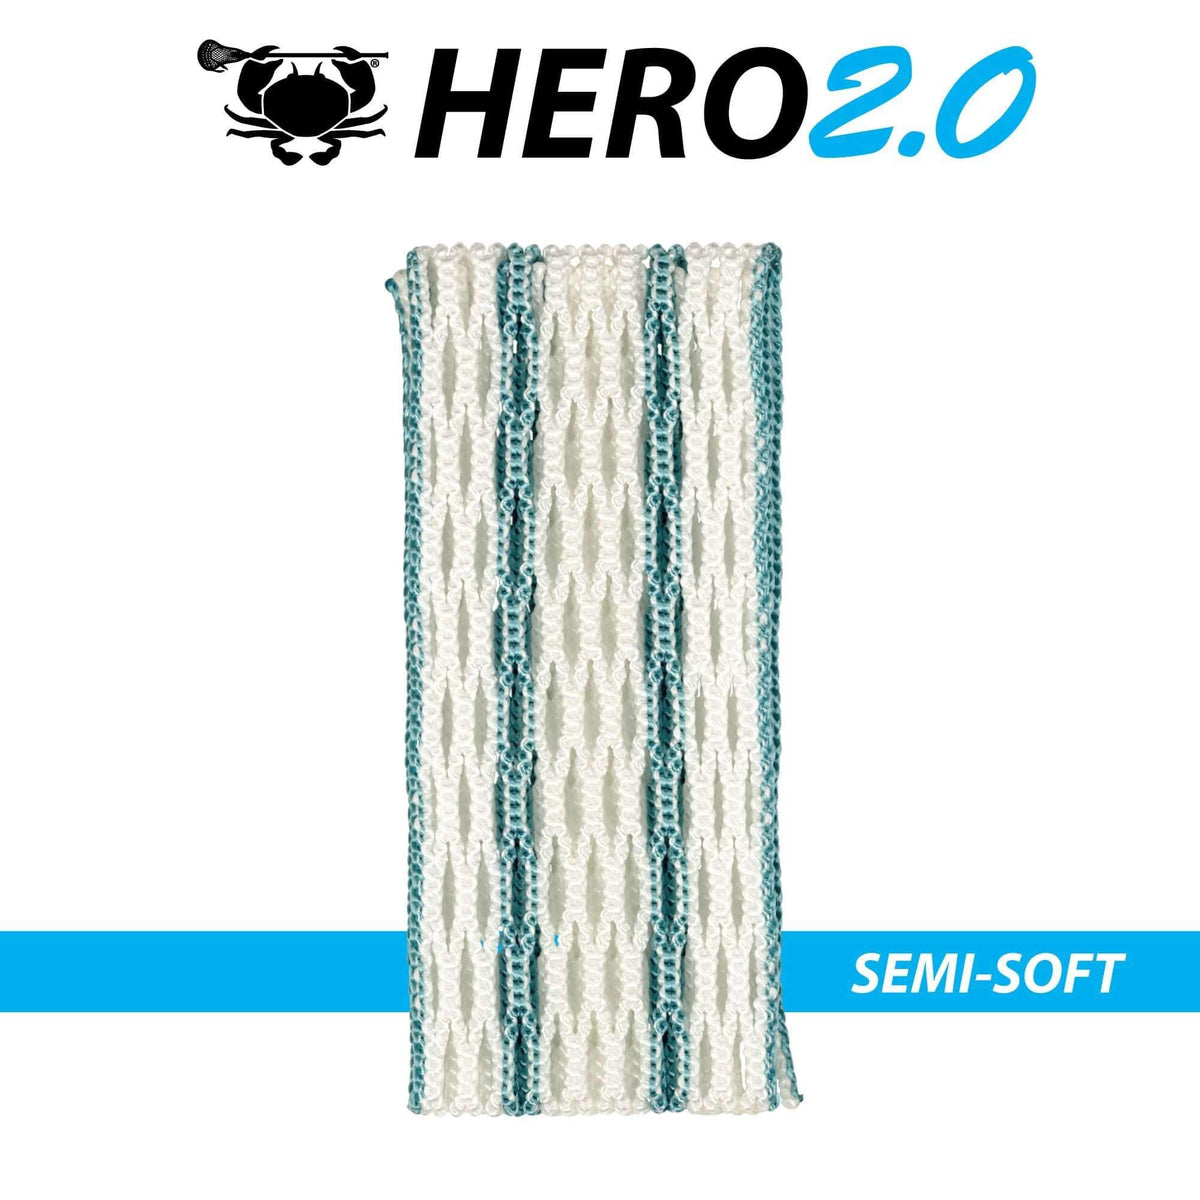 East Coast Dyes Stringing Supplies Semi-Soft / Carolina ECD Hero 2.0 Semi-Soft Striker Lacrosse Mesh from Lacrosse Fanatic